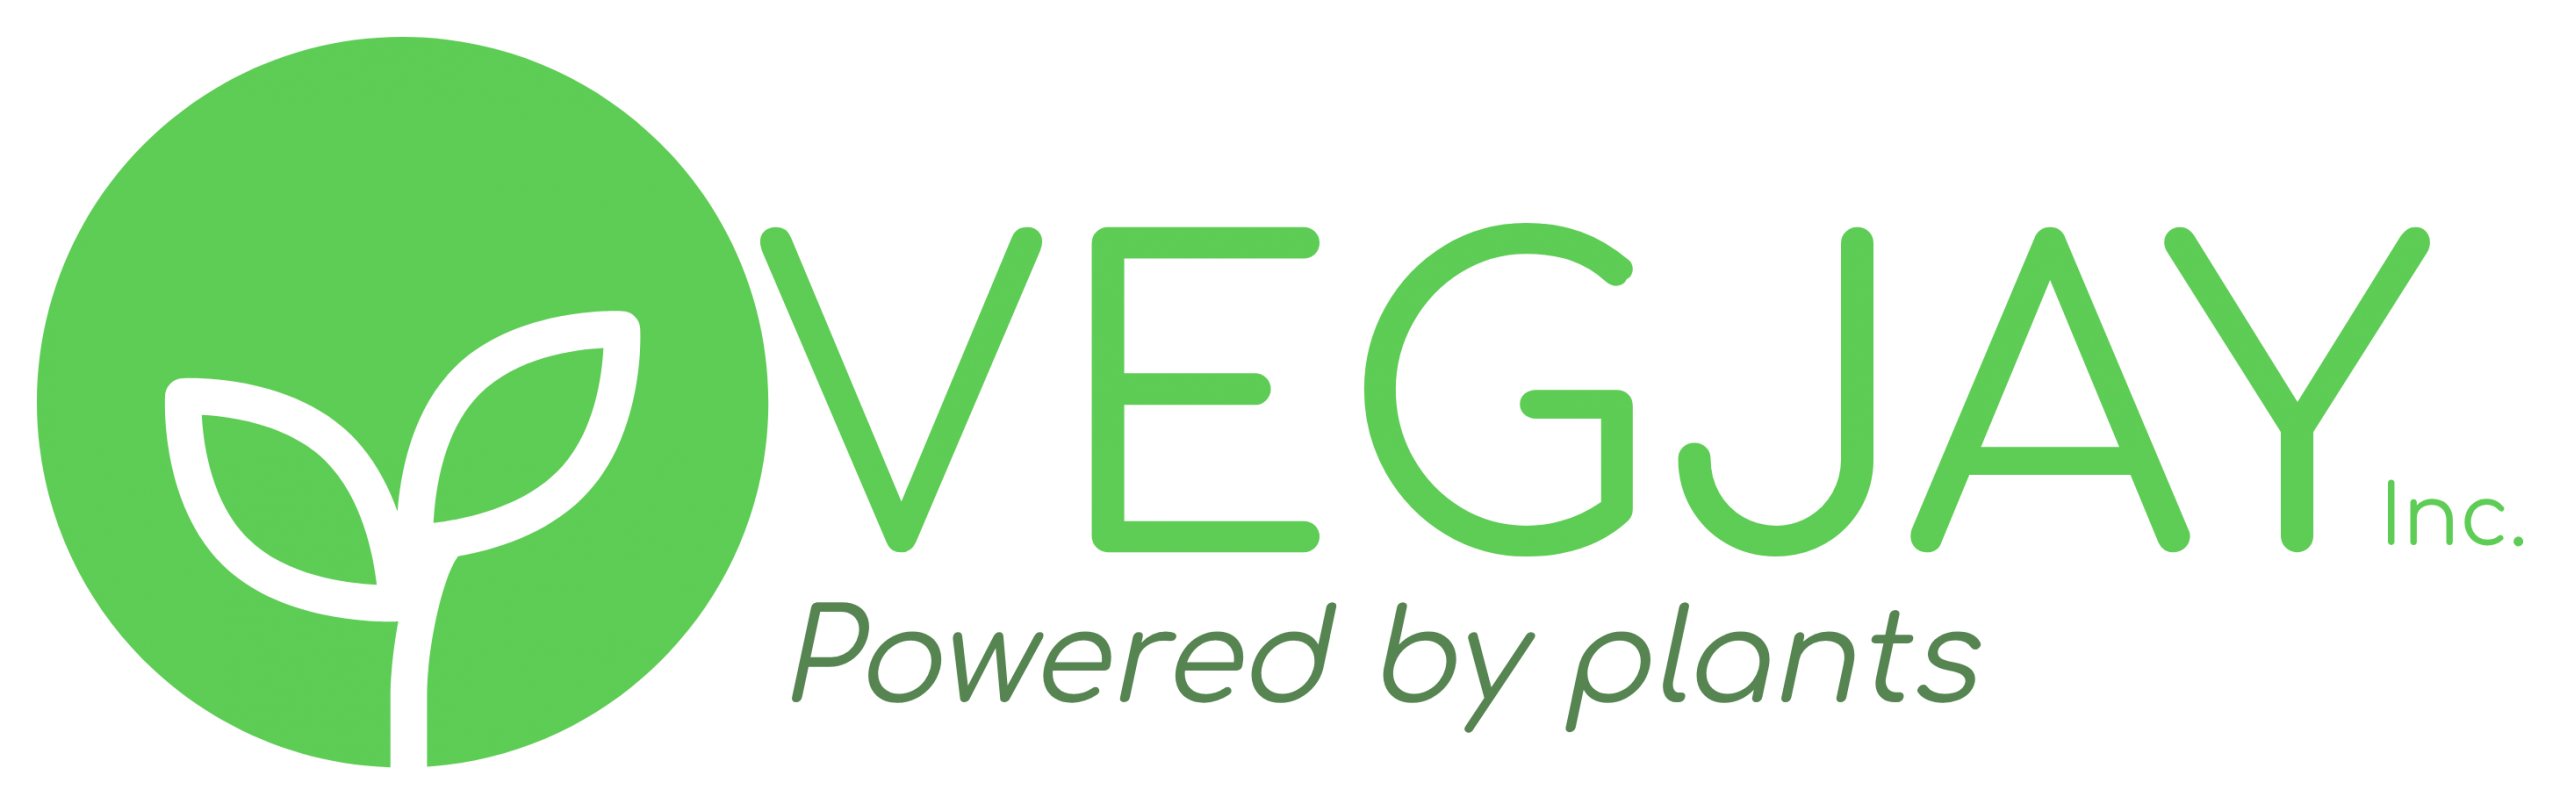 Vegjay – Launching post